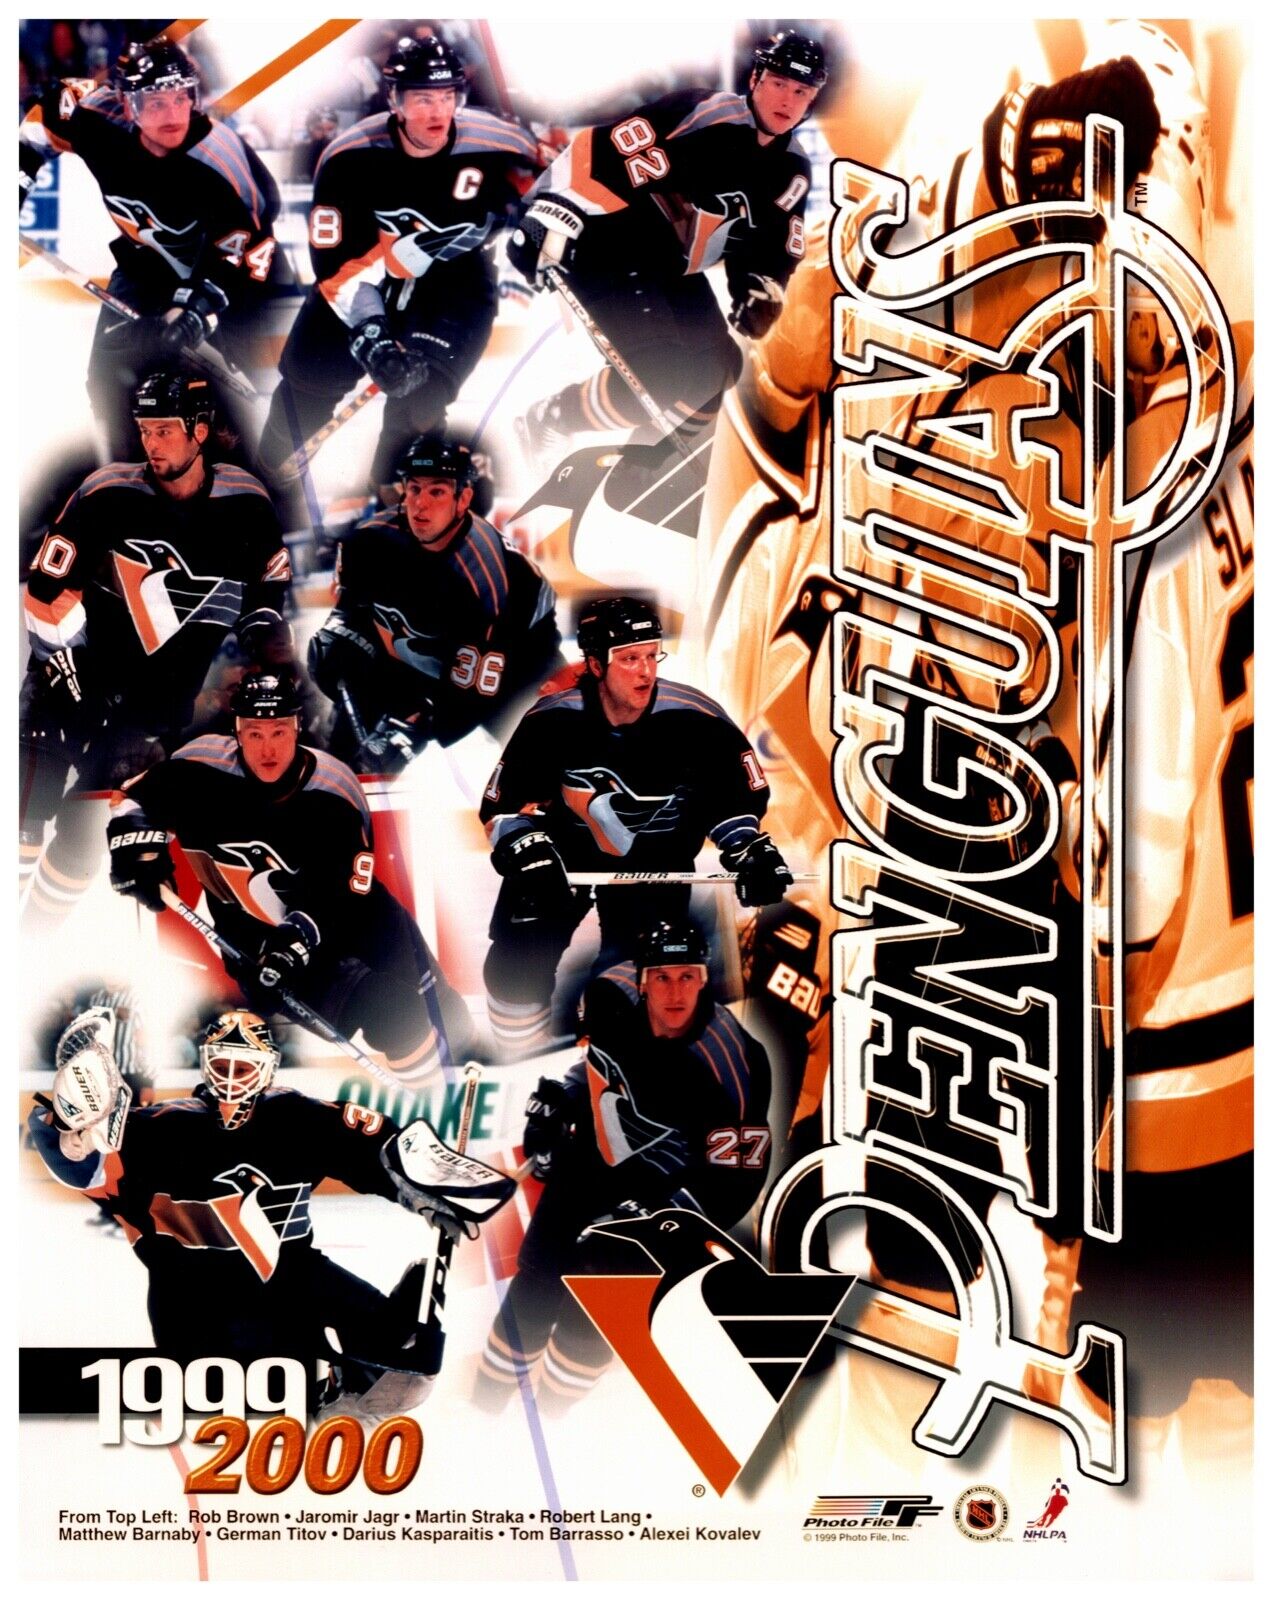 1999 / 2000 Pittsburgh Penguins Team Composite NHL Photo File 8x10 Photo